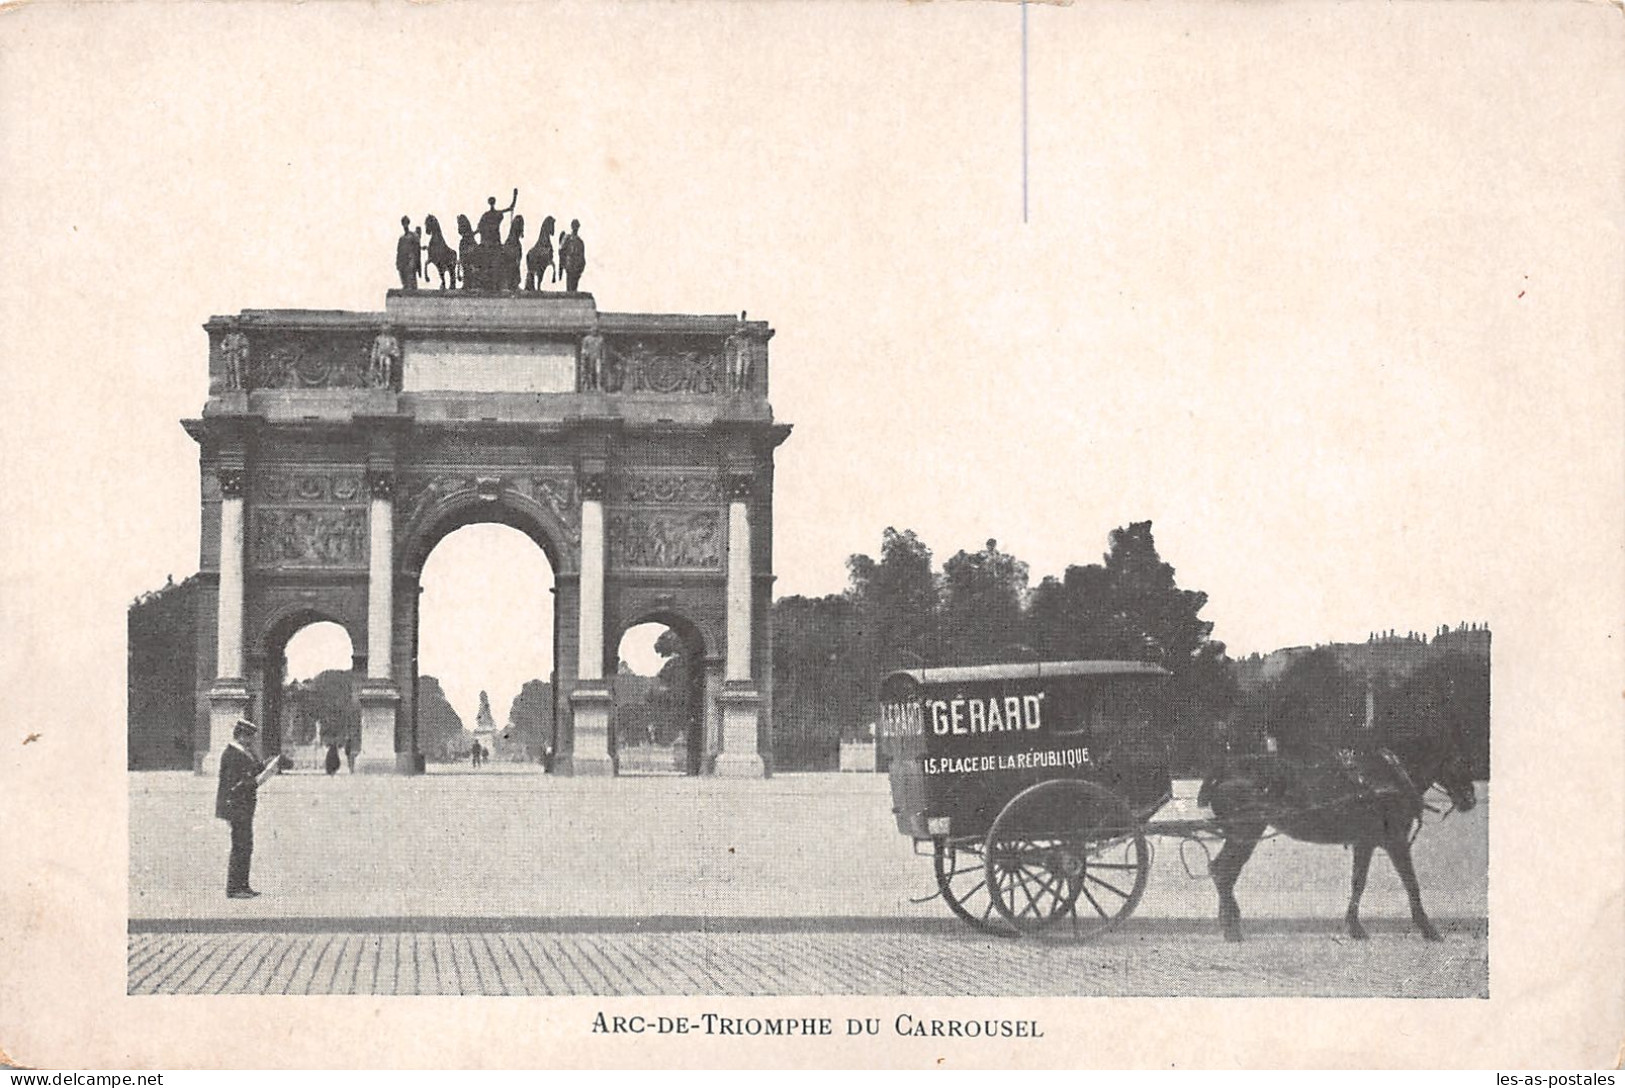 75 PARIS ARC DE TRIOMPHE CARROUSEL CALECHE GERARD - Panoramic Views